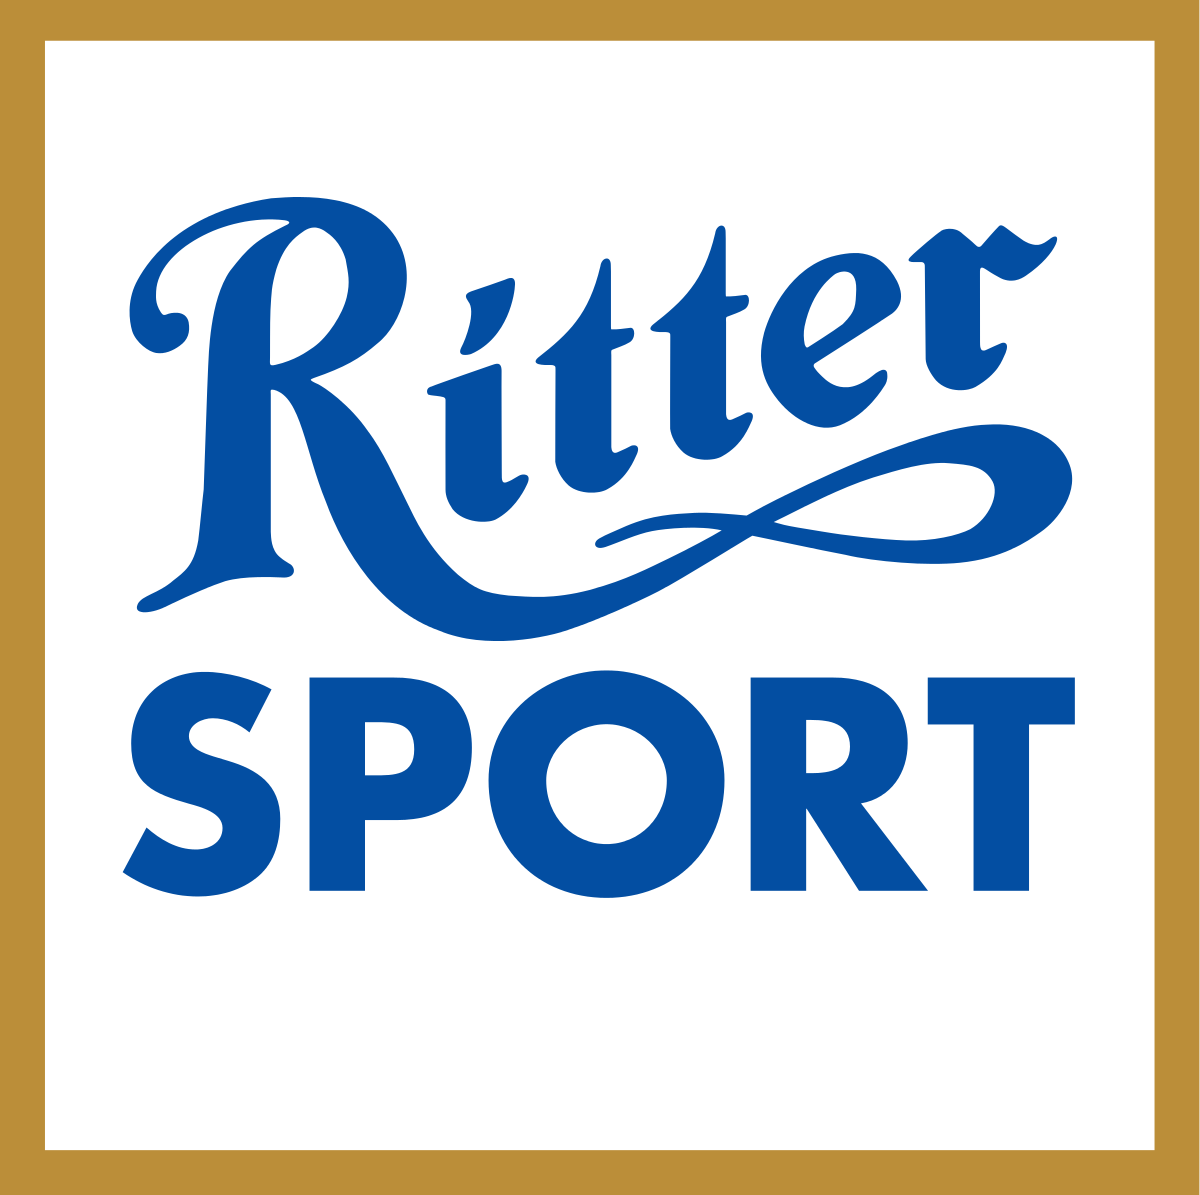 Ritter Sport Master Chocolatier logo for Branded Advent Calendars